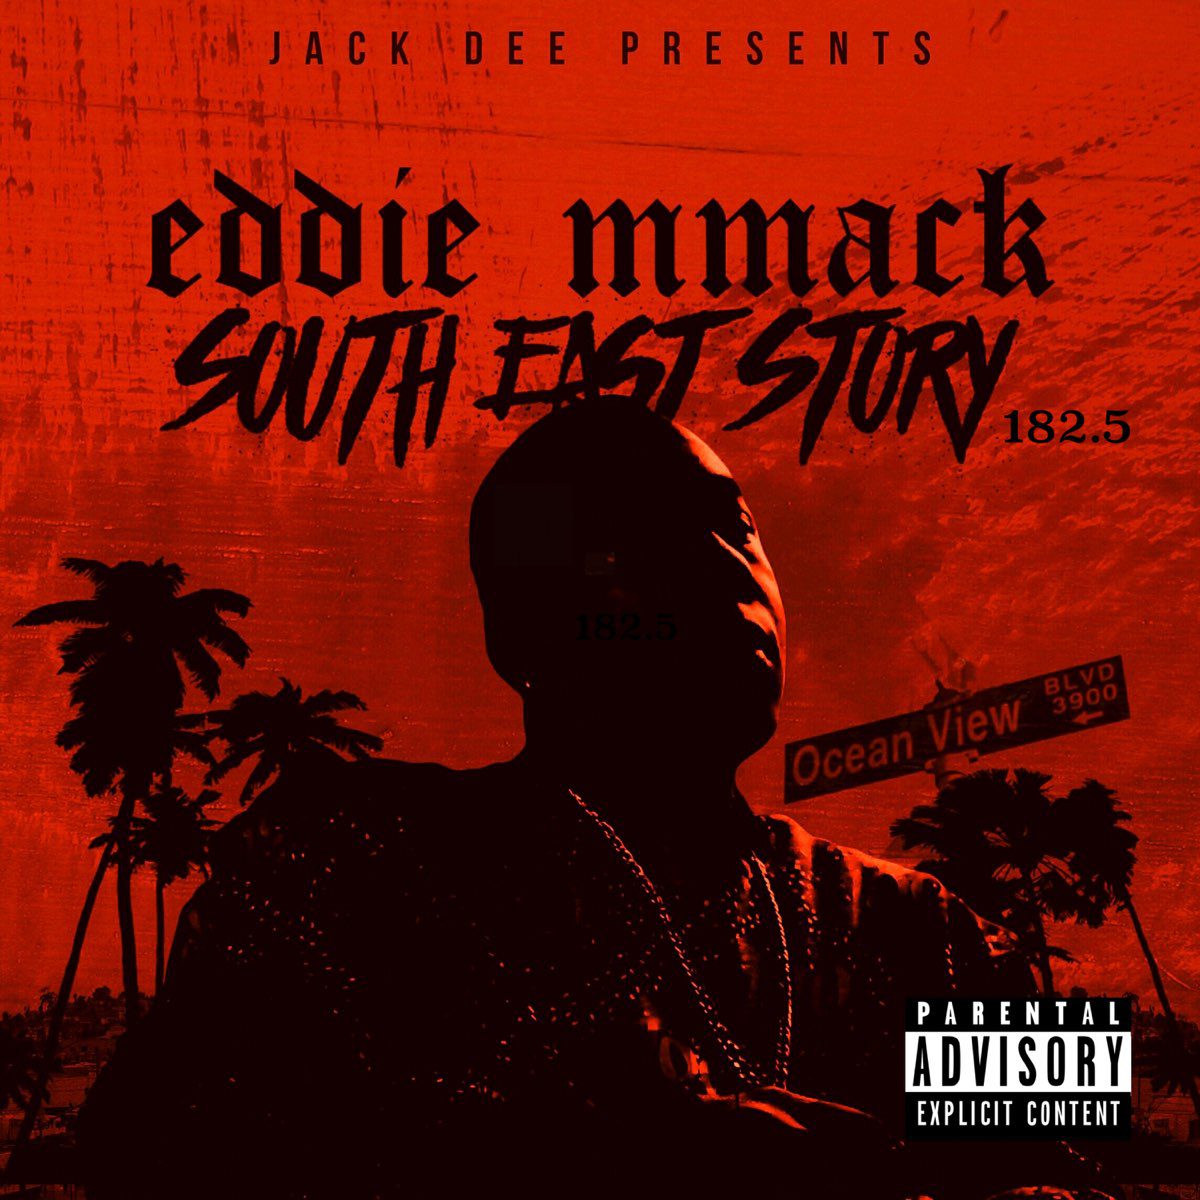 Eddie MMack - South East Story 182.5